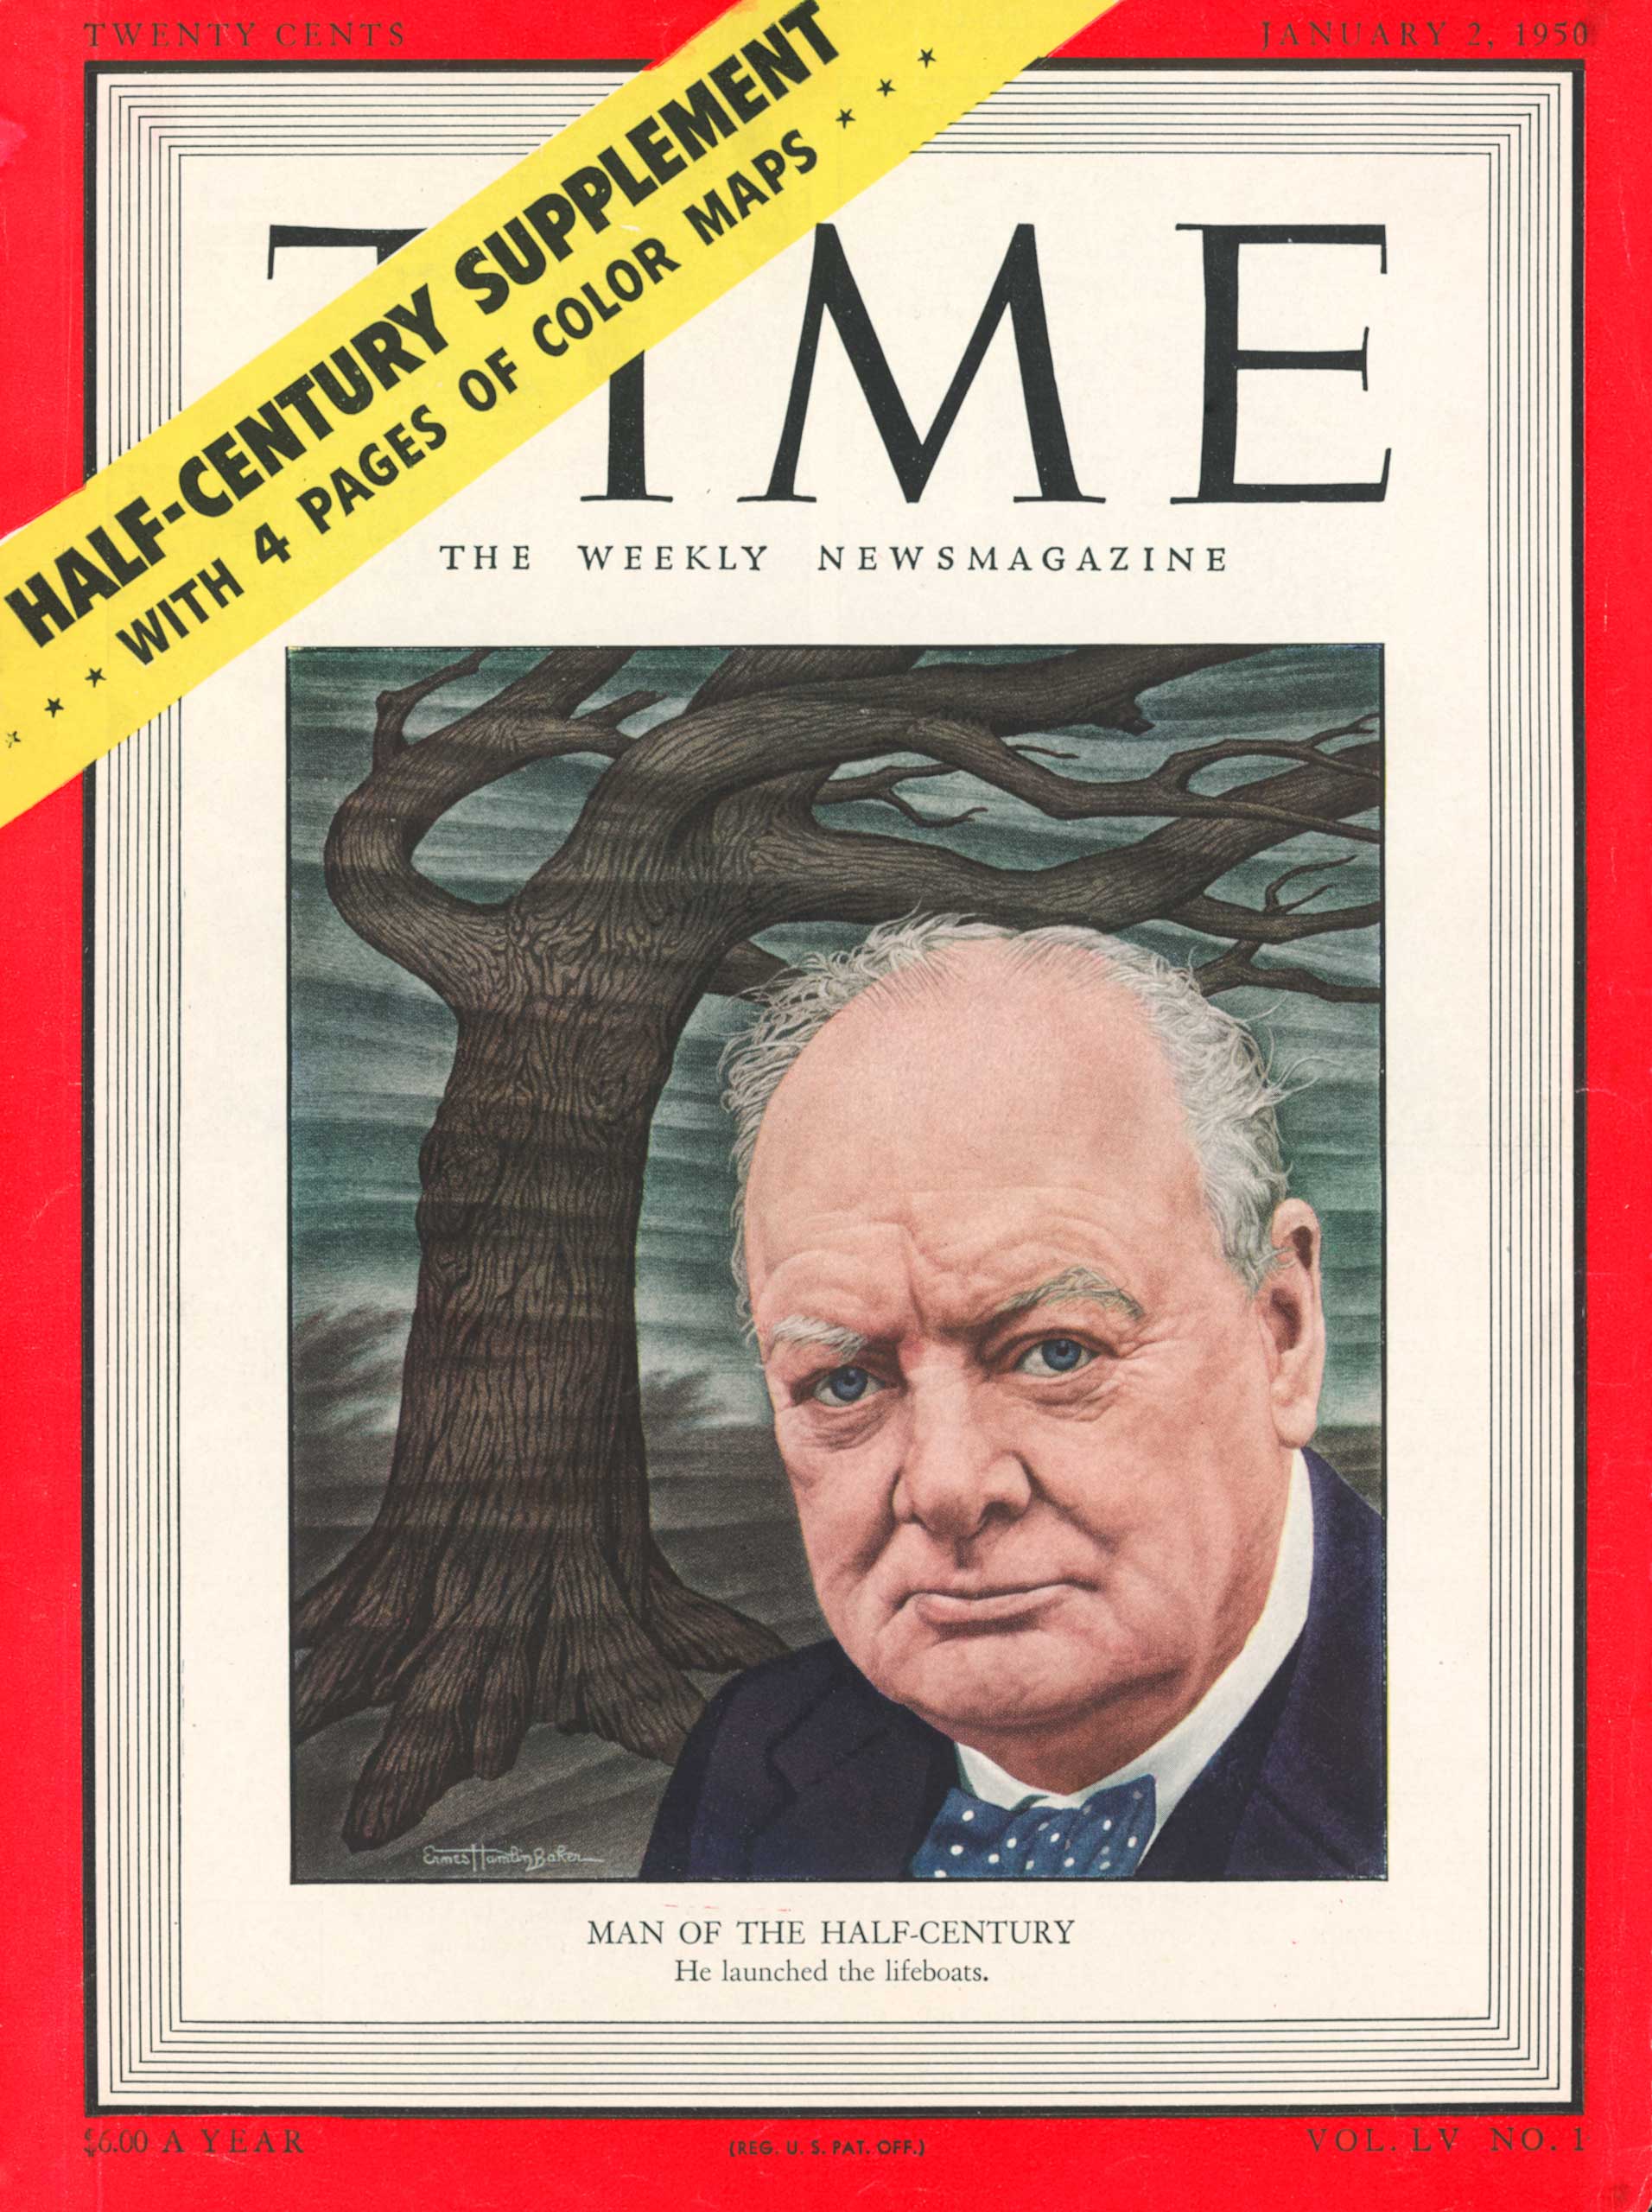 1949: Winston Churchill